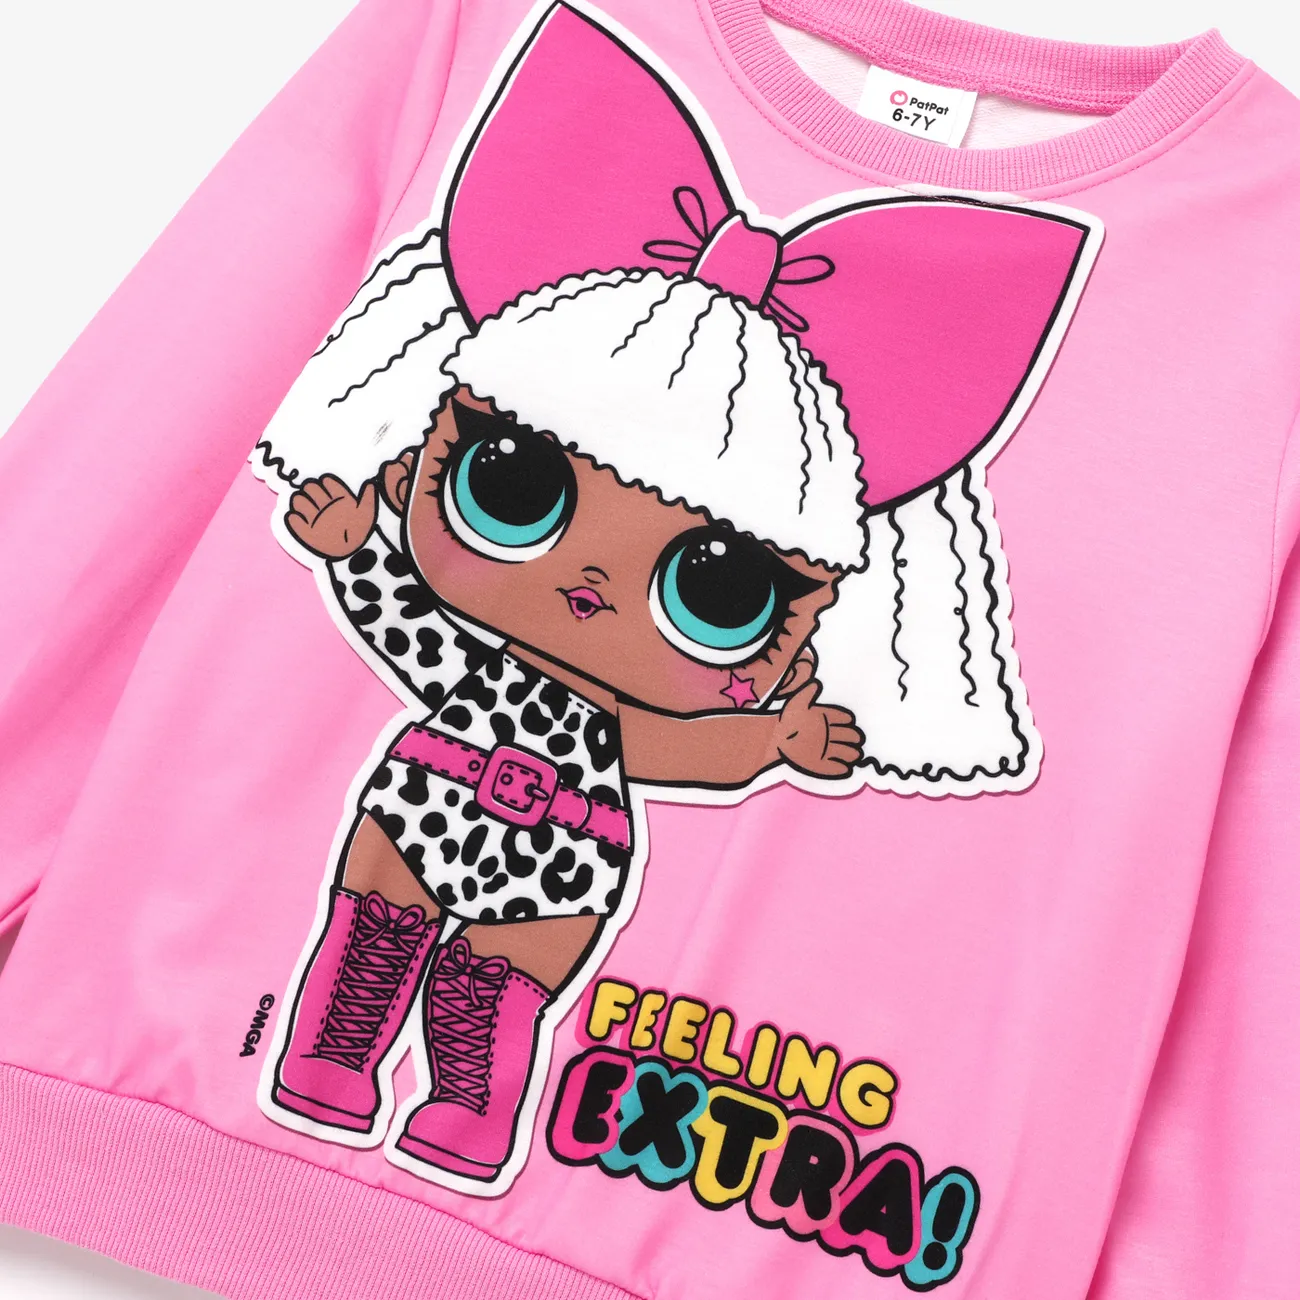 LOL Surprise Kinder Mädchen Figur Pullover Sweatshirts Rosa big image 1